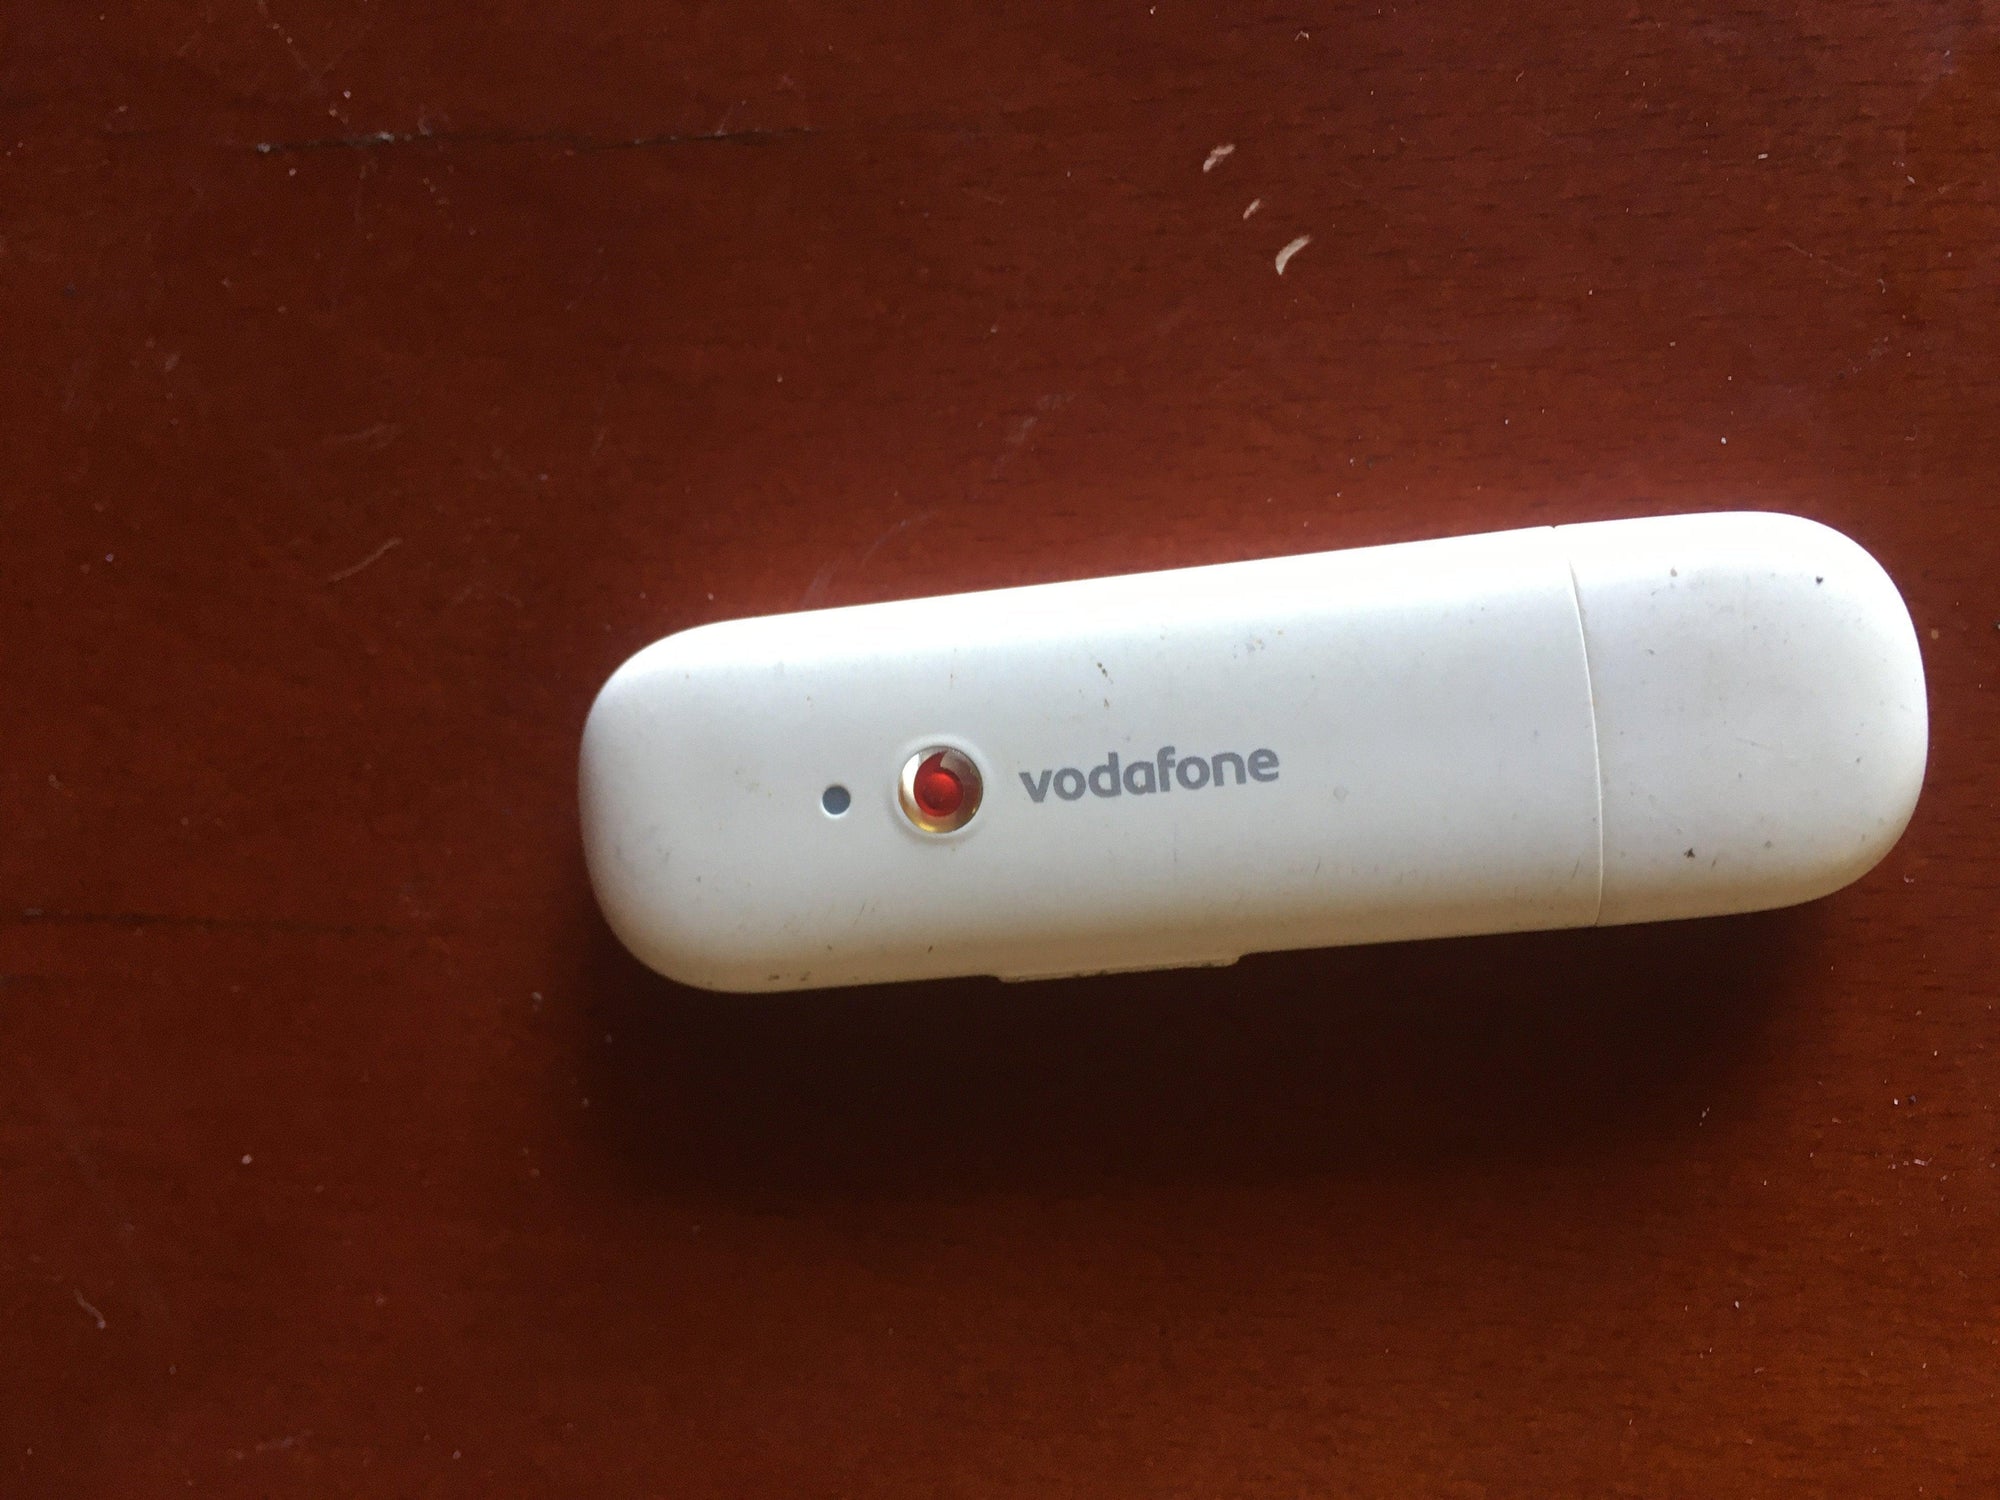 Vodafone Dongle - 2ndhandwarehouse.com